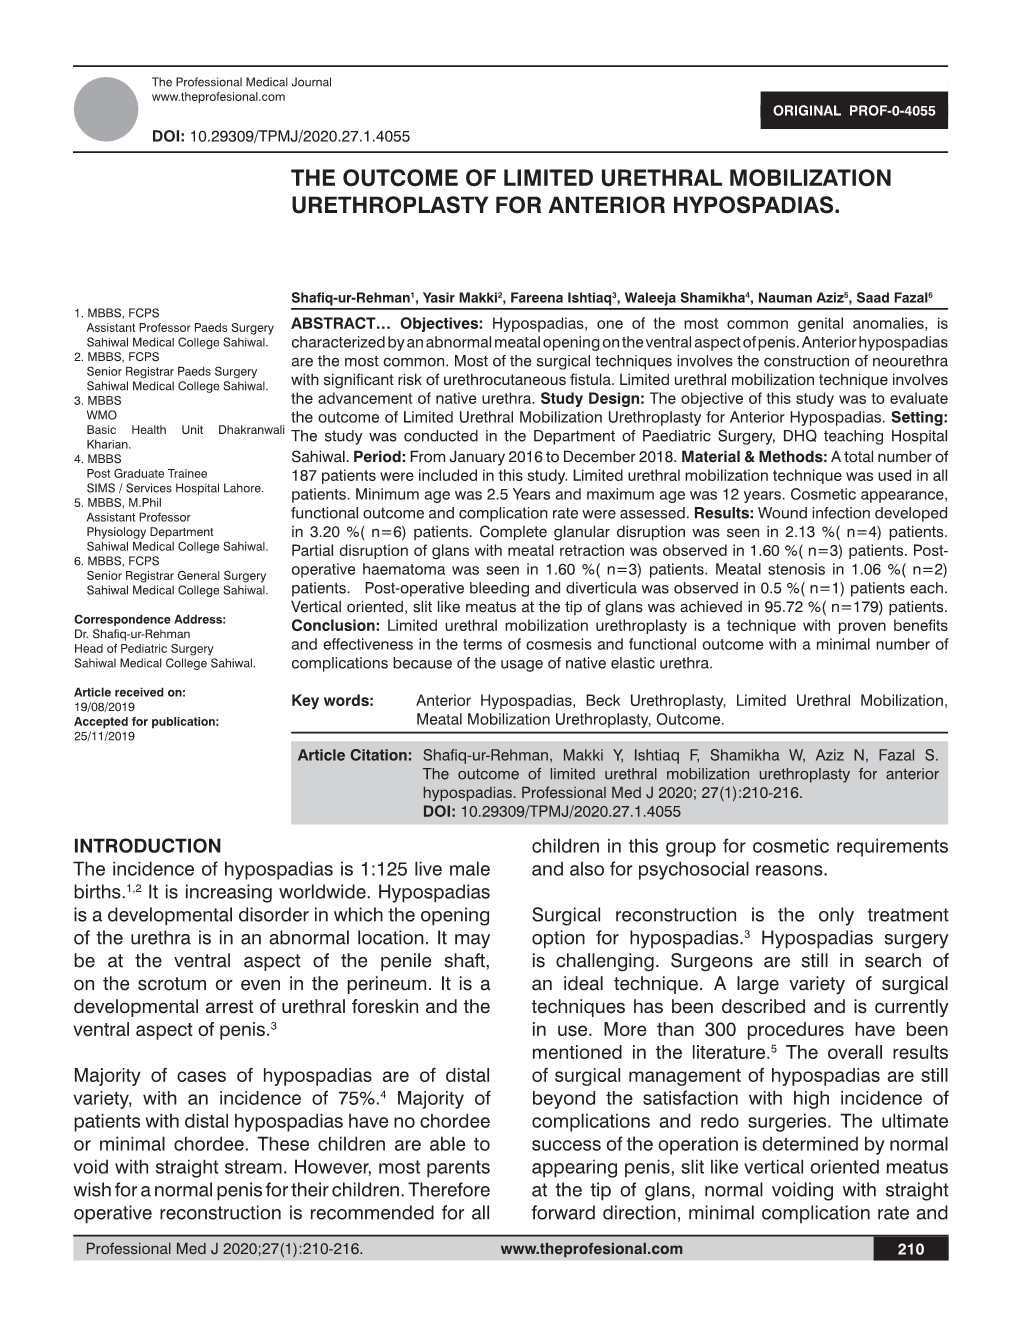 The Outcome of Limited Urethral Mobilization Urethroplasty for Anterior Hypospadias